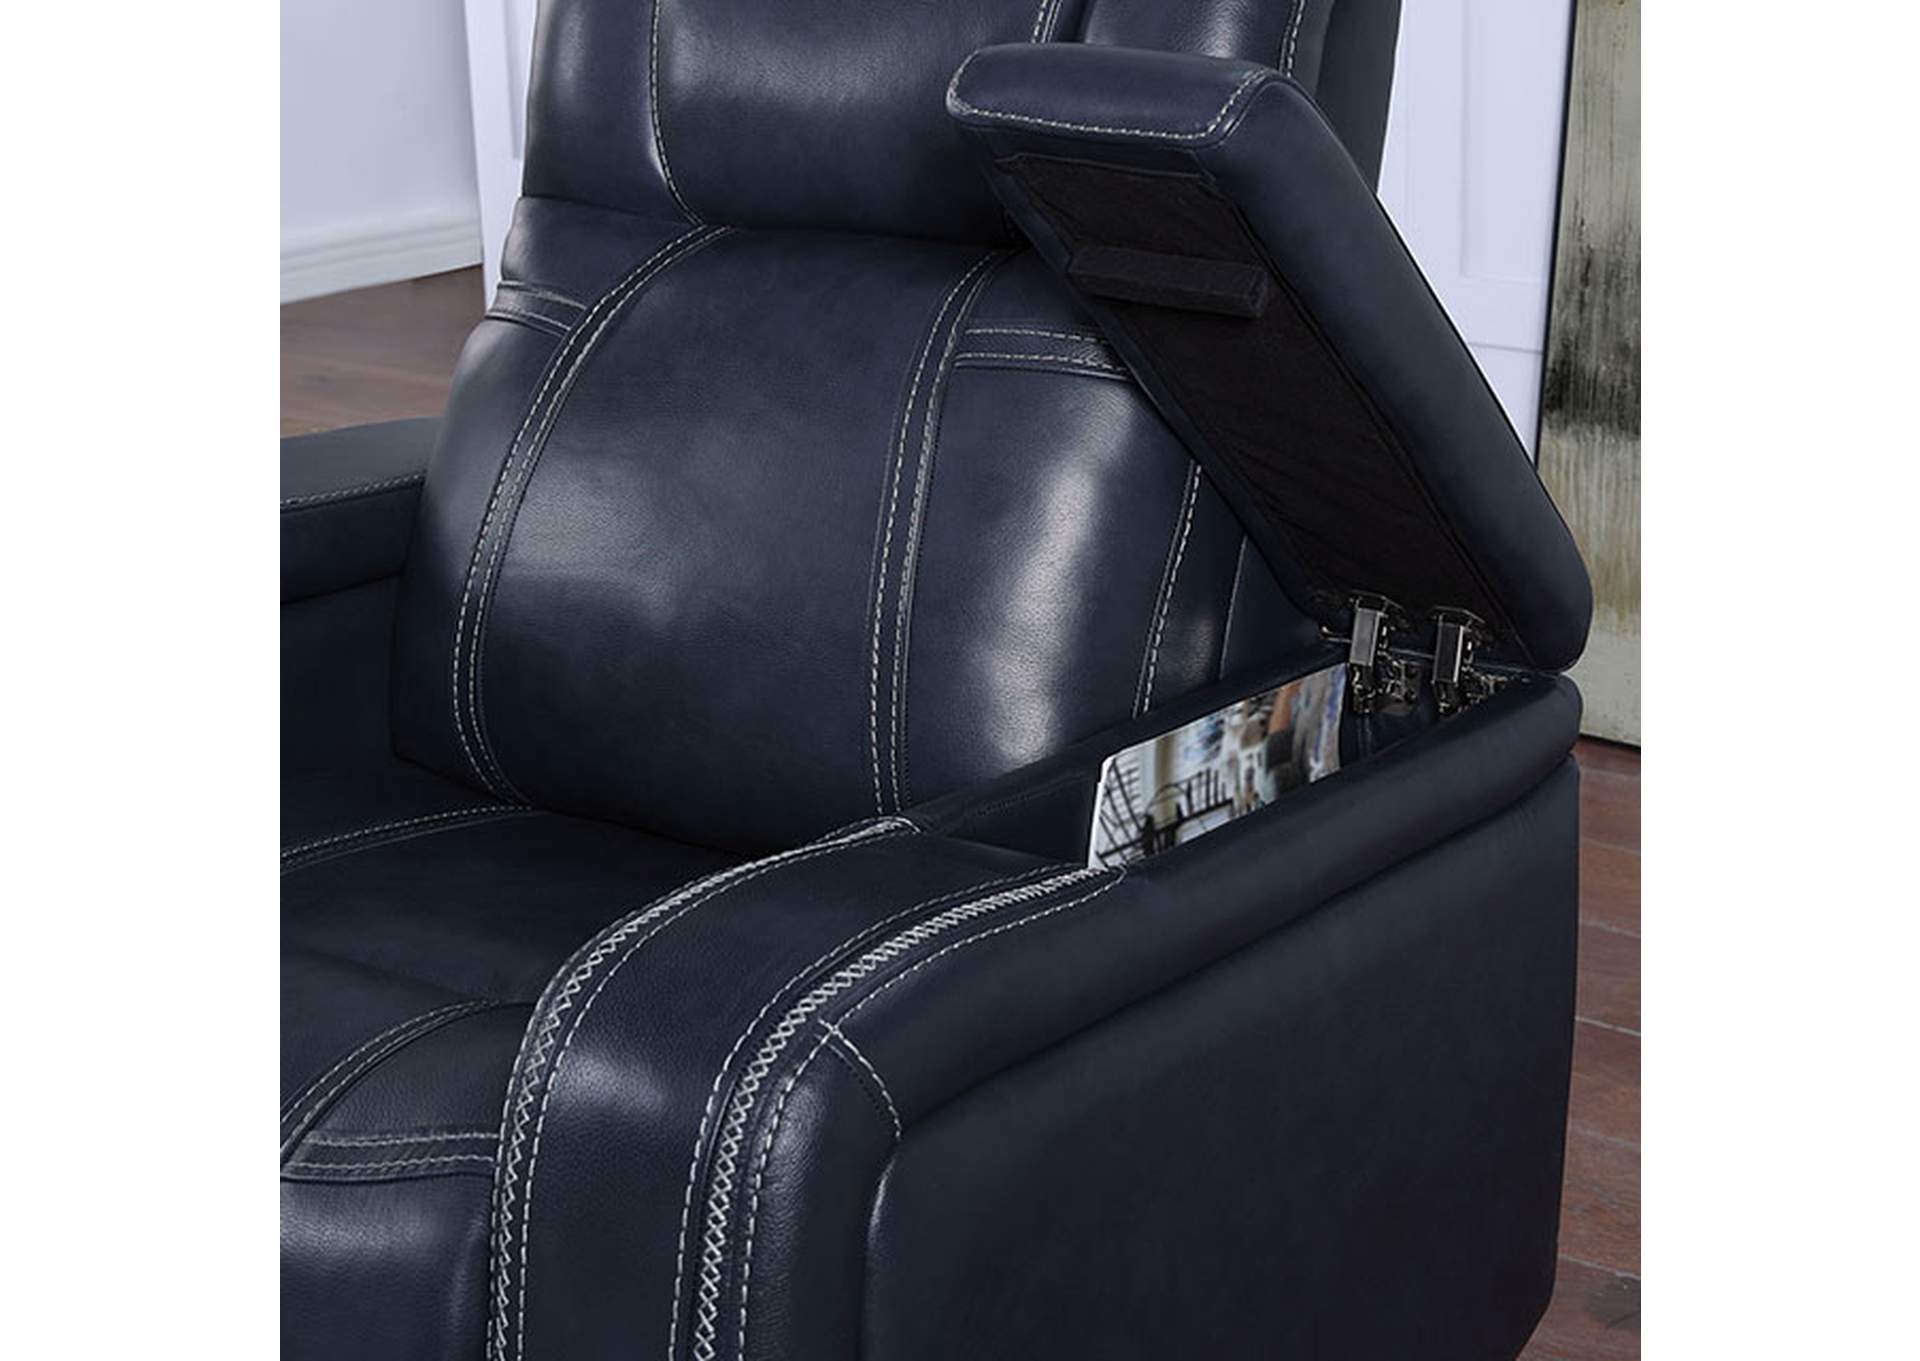 Zephyr Power Sofa,Furniture of America